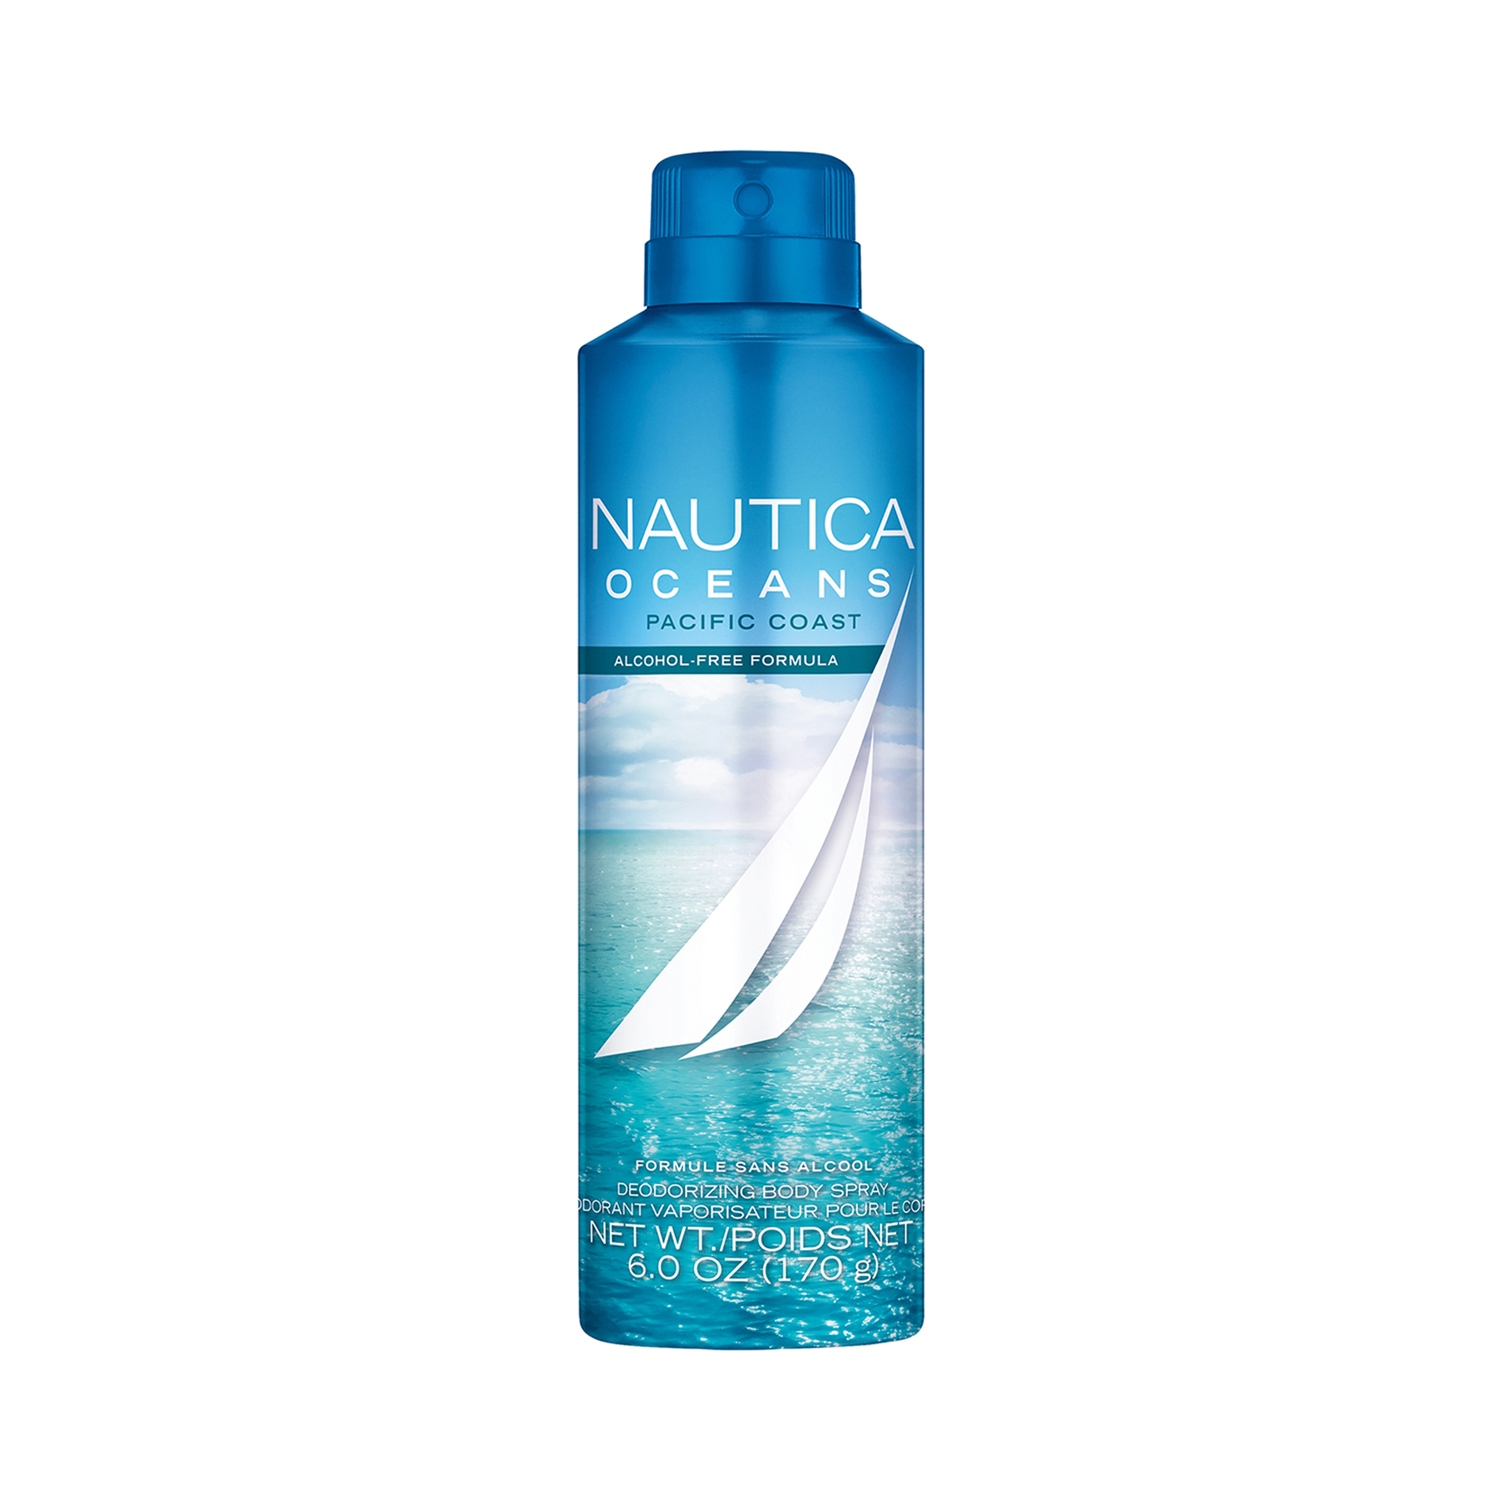 Nautica | Nautica Oceans Pacific Coast Body Spray (170g)